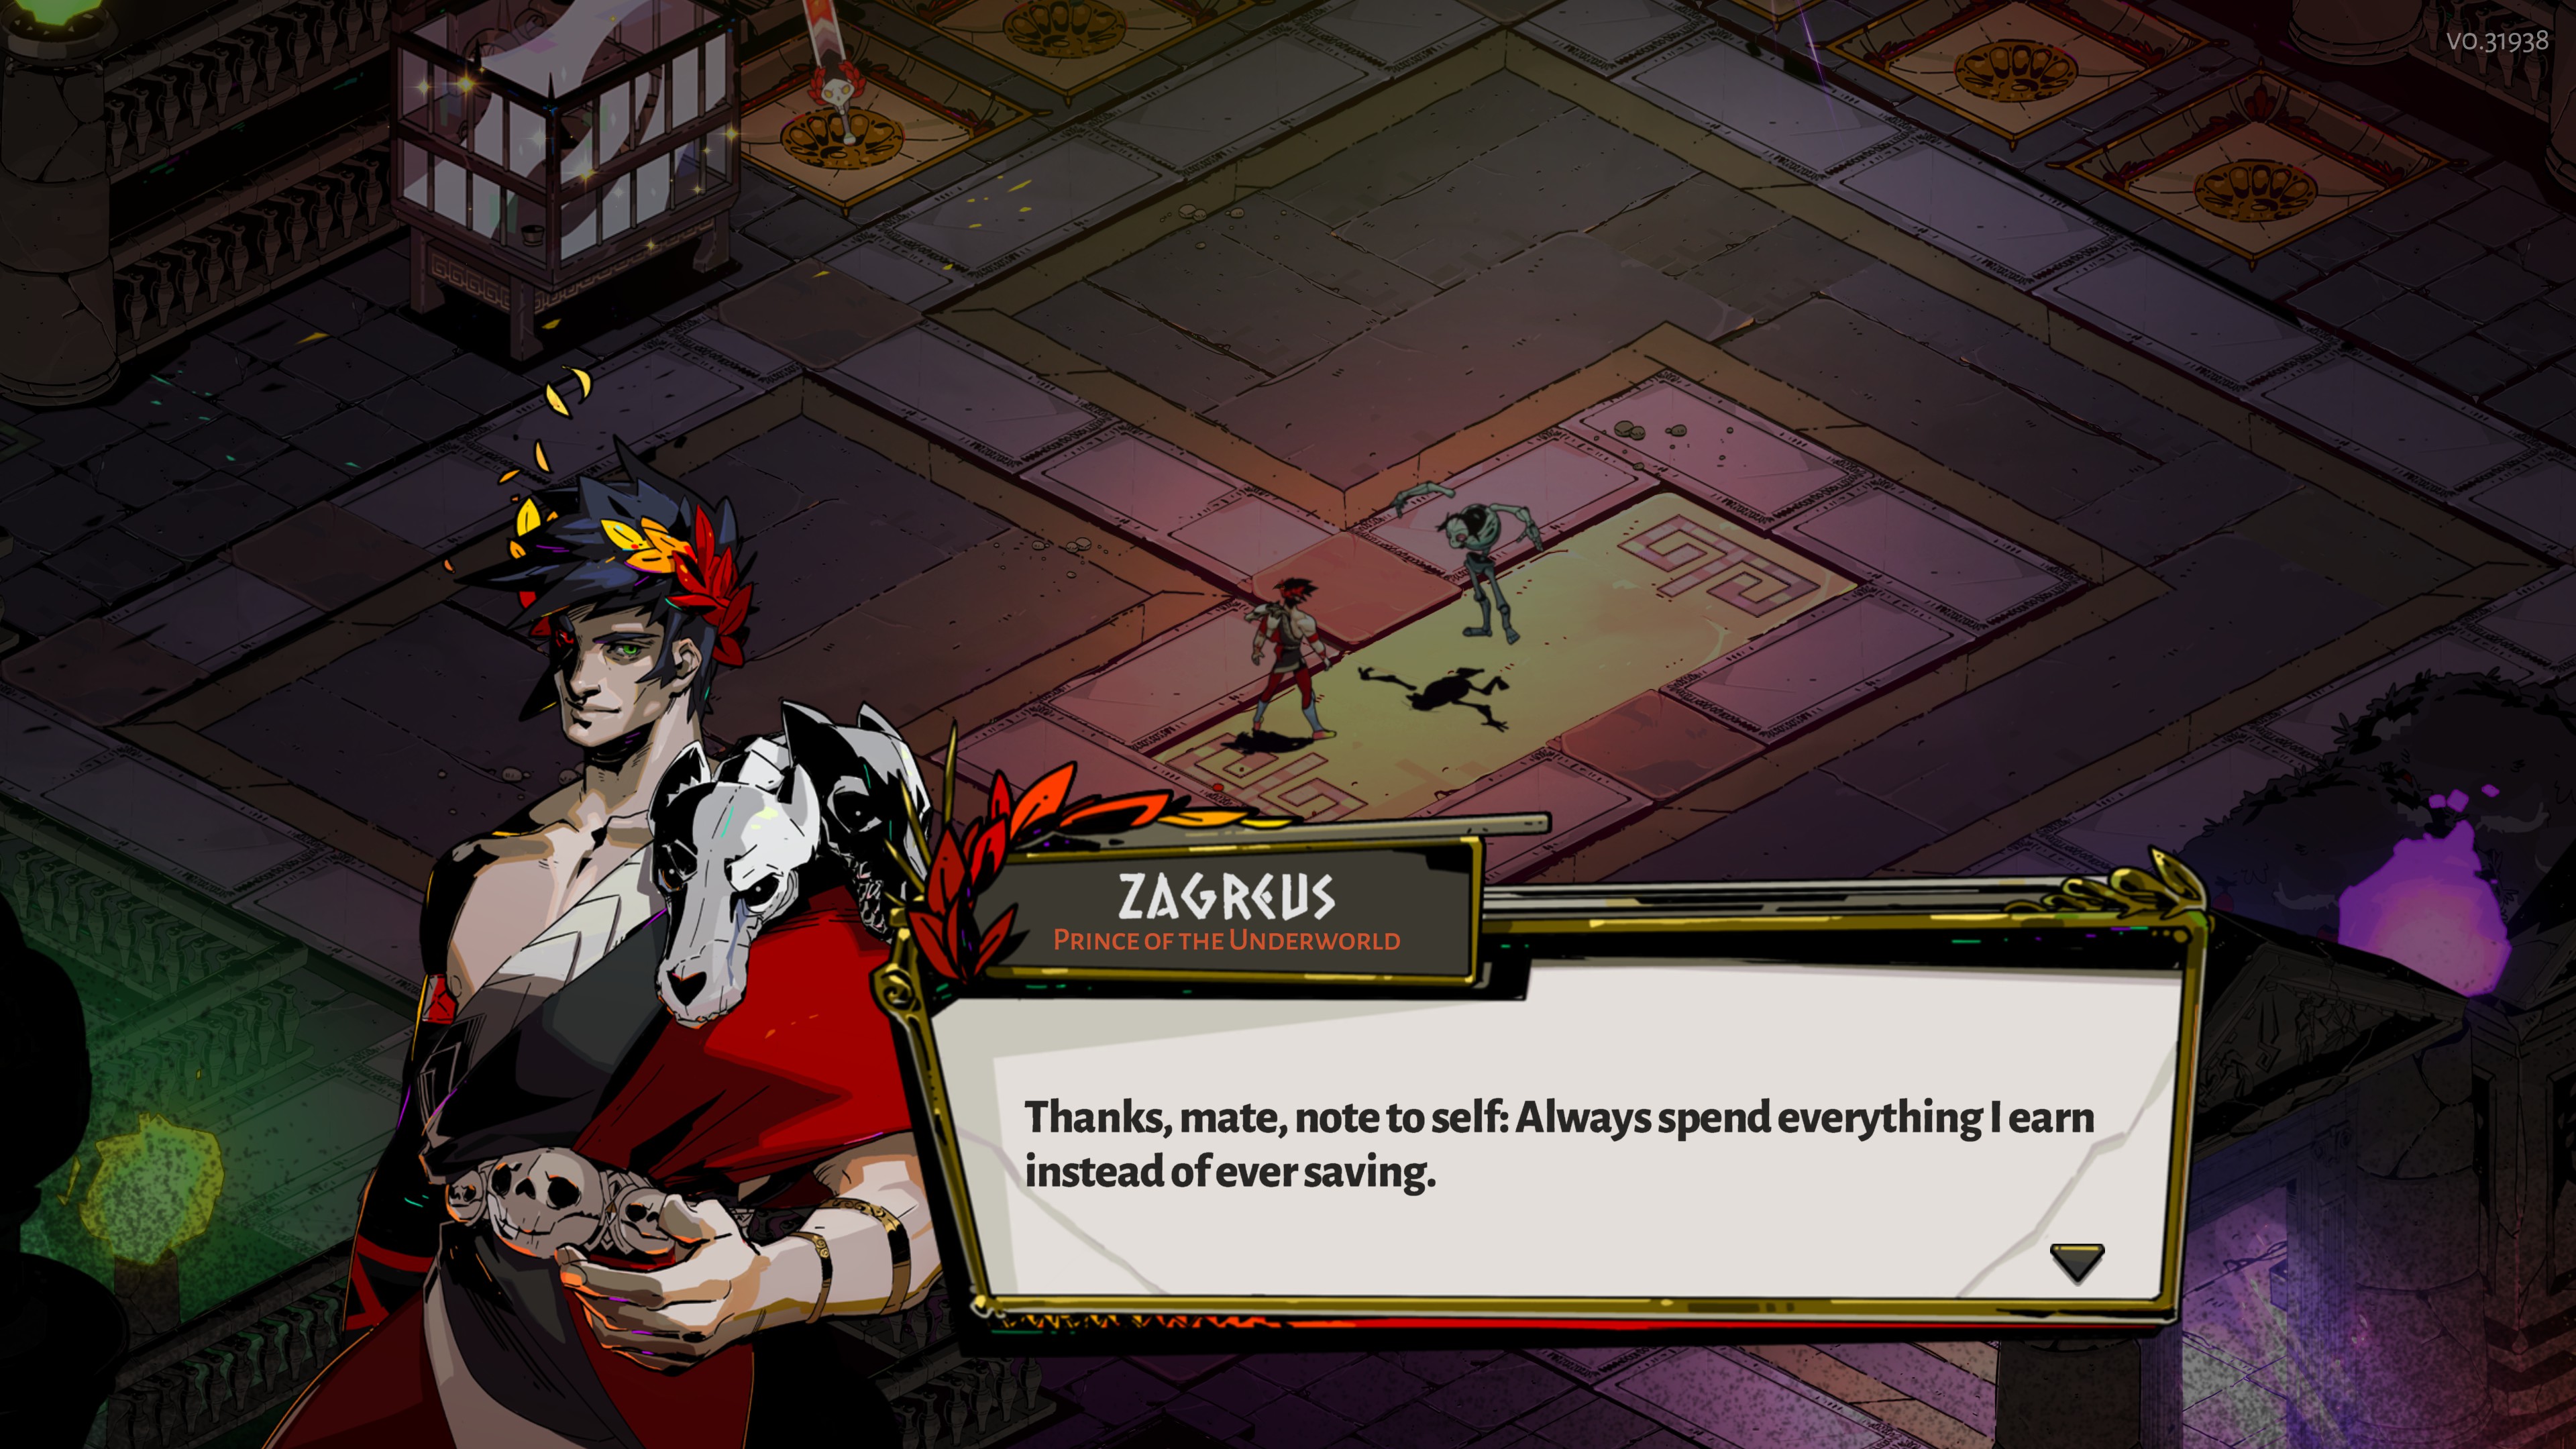 Zagreus has the right idea.